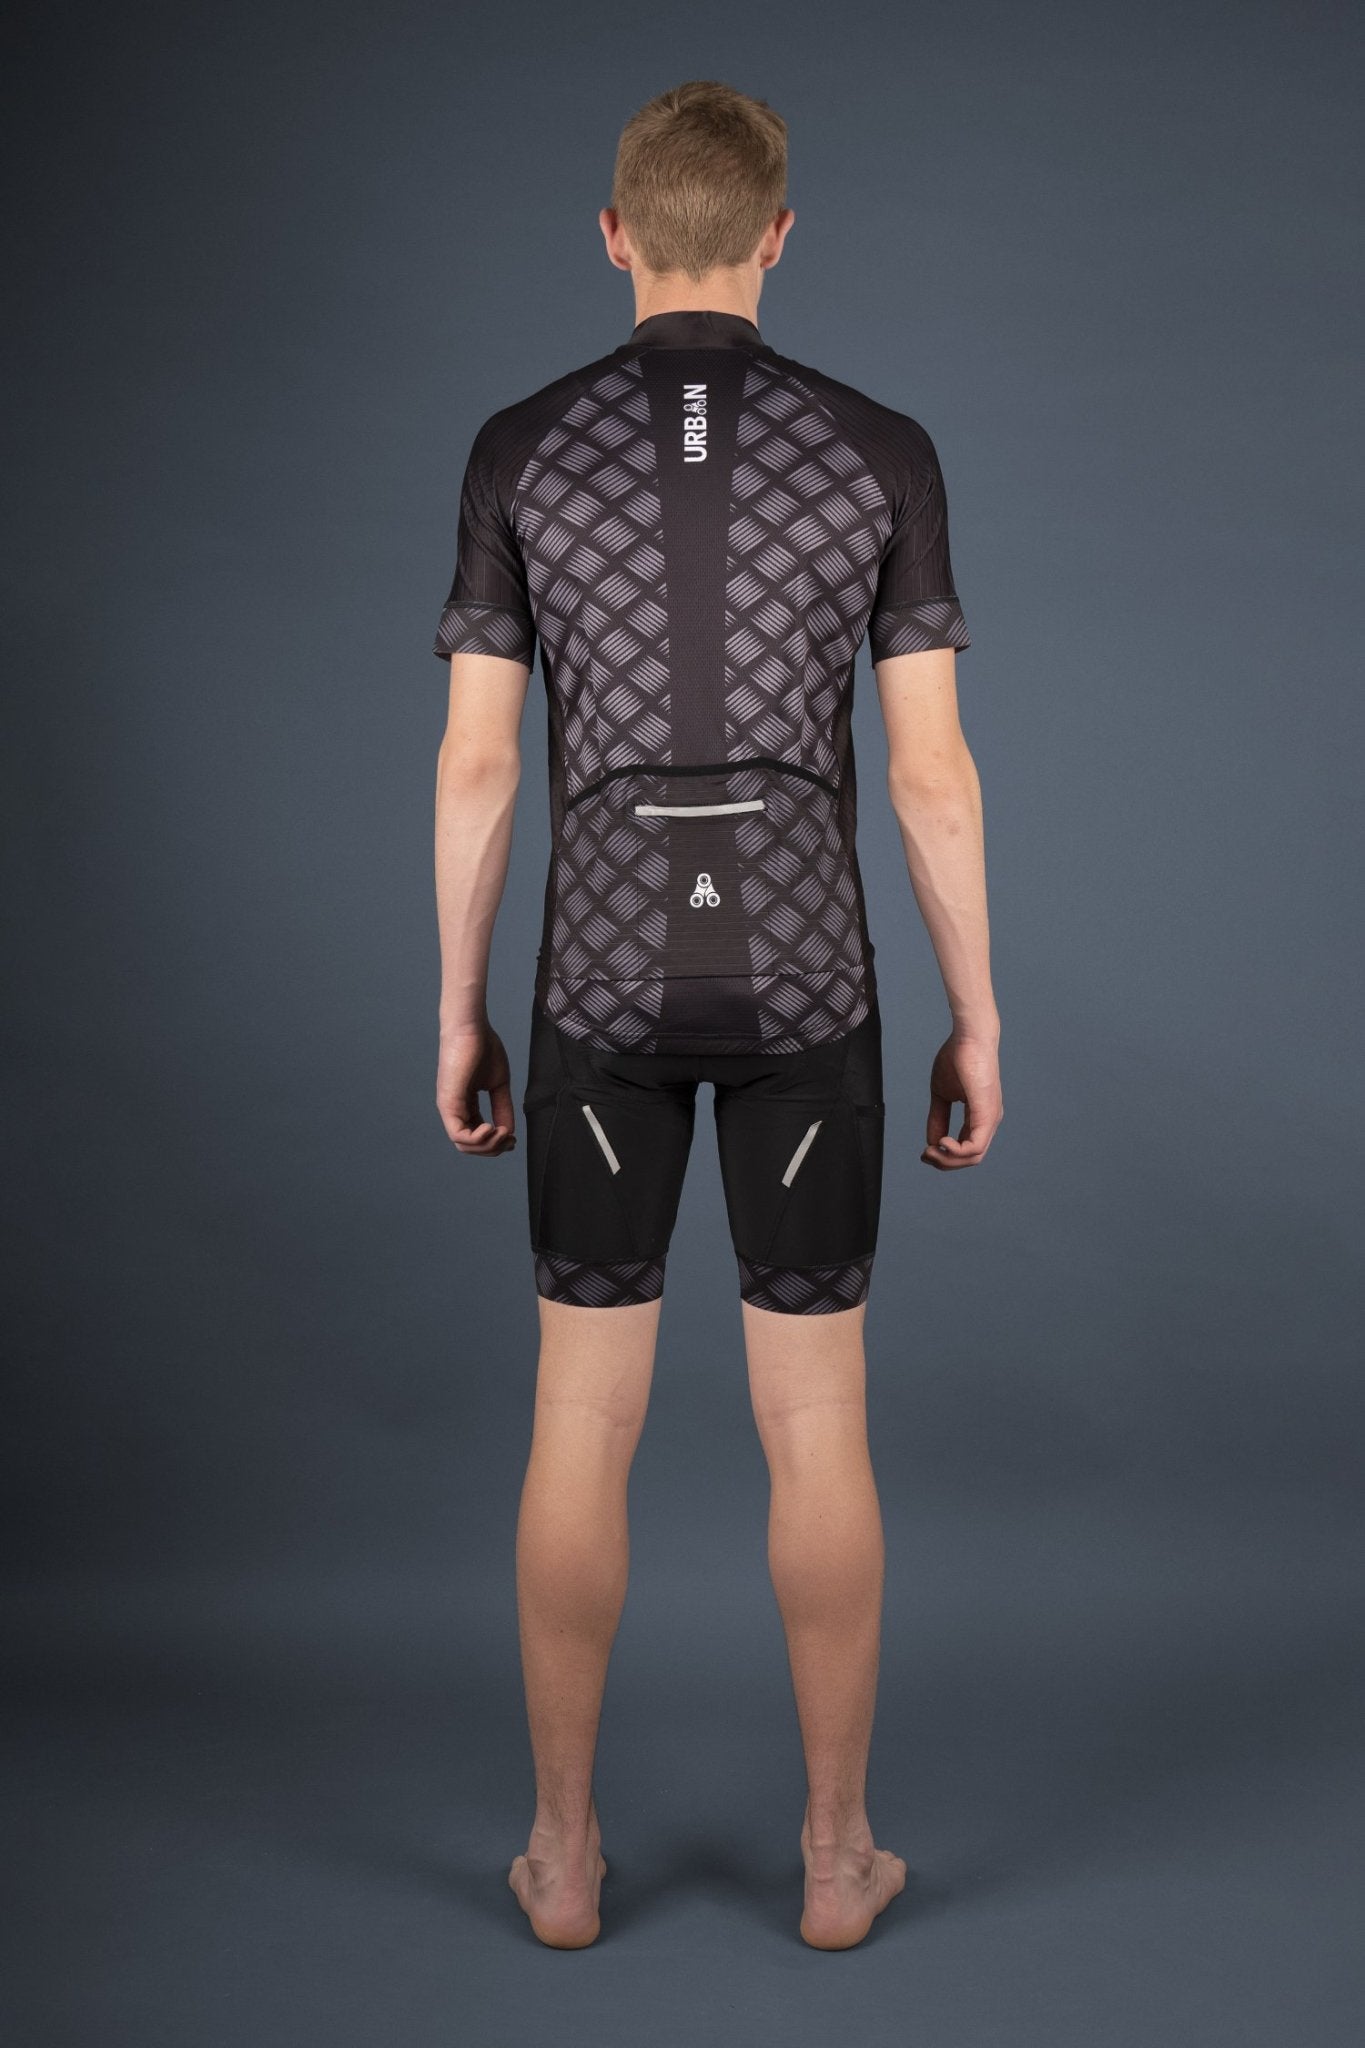 Men’s Pro Urban Cycling Carbide Short Sleeve Jersey, Bib Shorts, or Ki ...